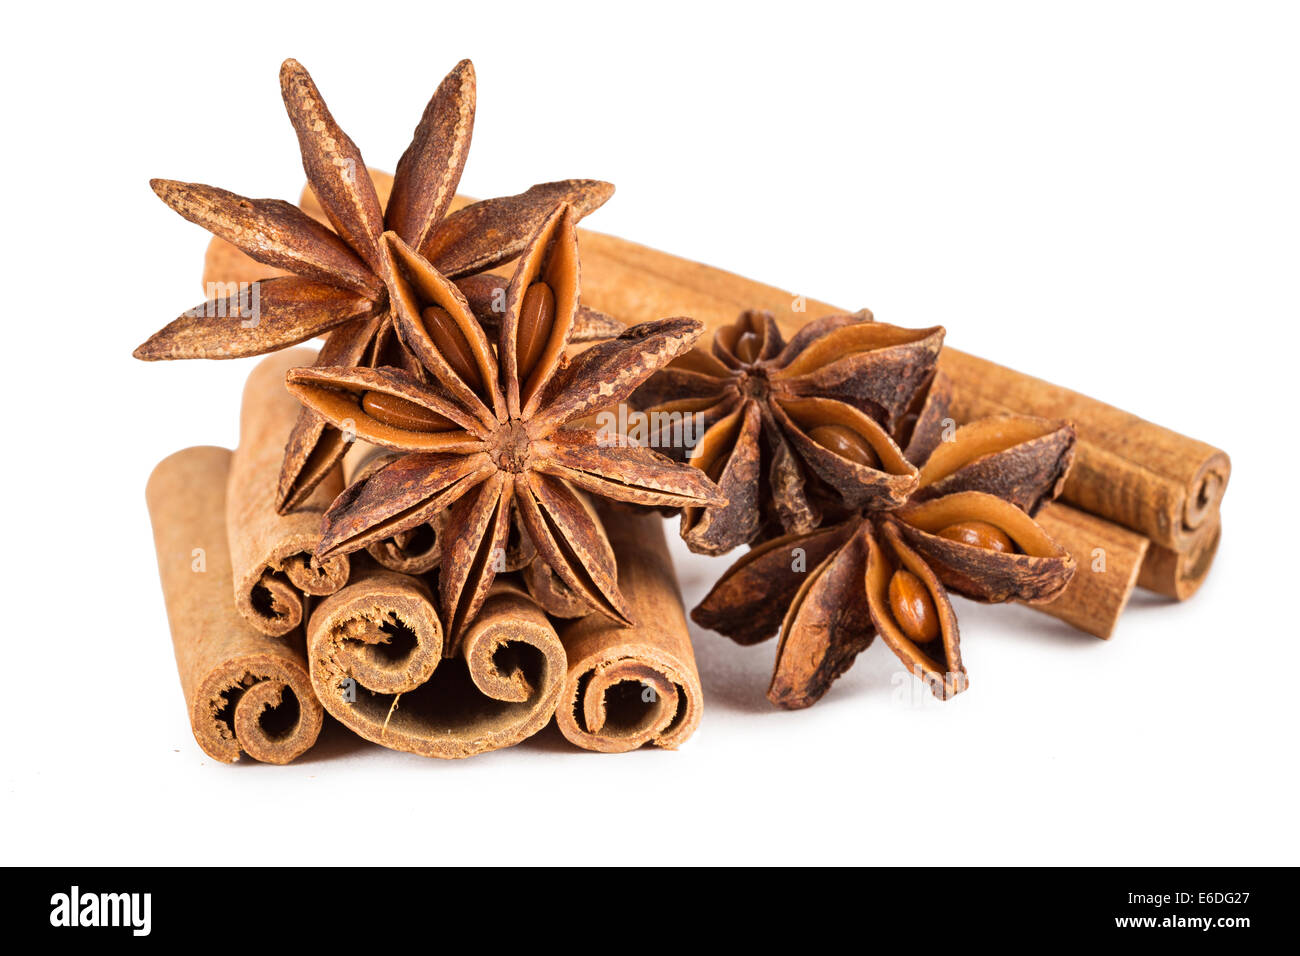 cinnamon sticks and star anise Stock Photo